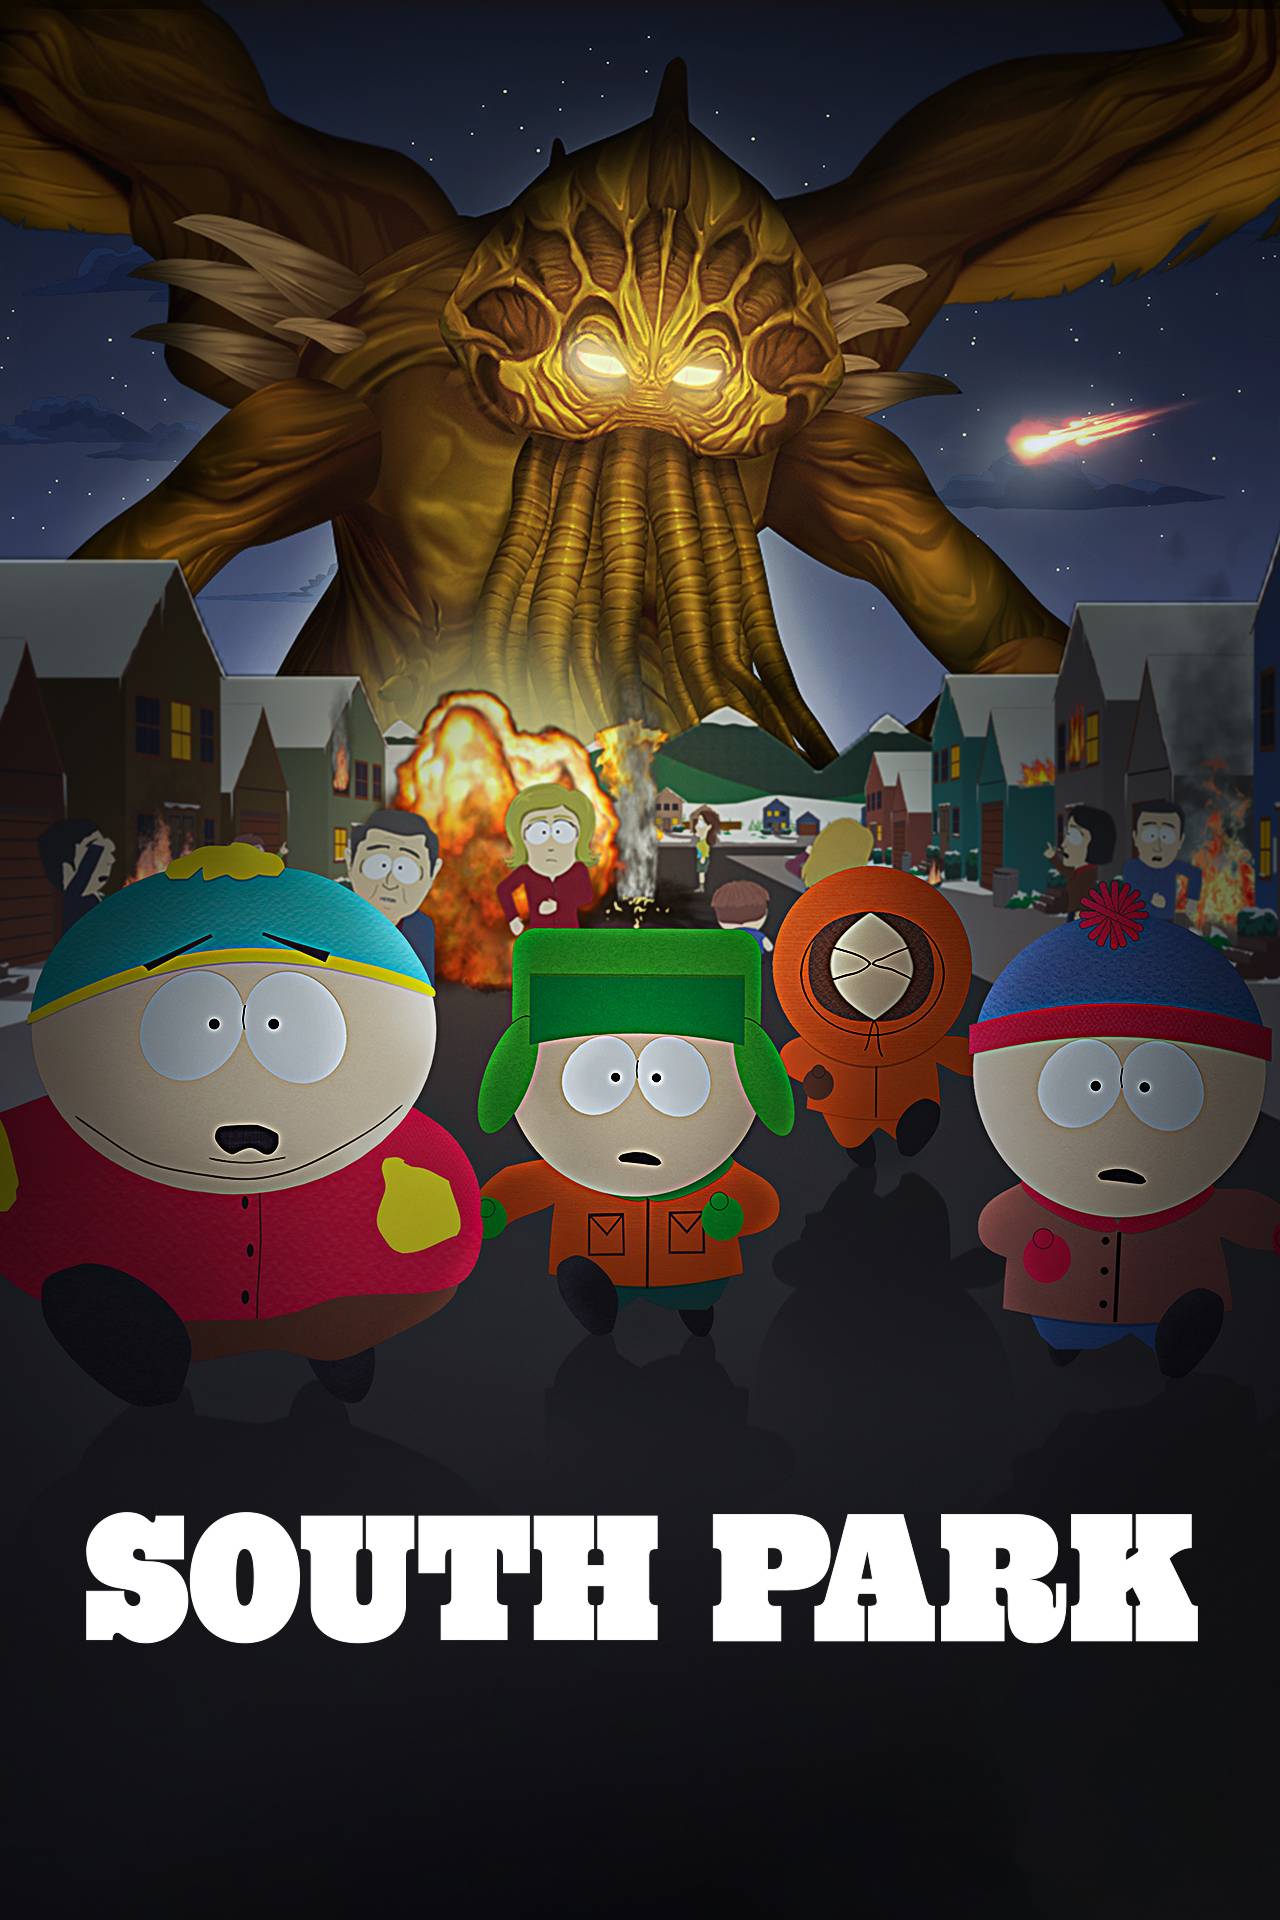 Pinball FX - South Park Pinball - Epic Games Store